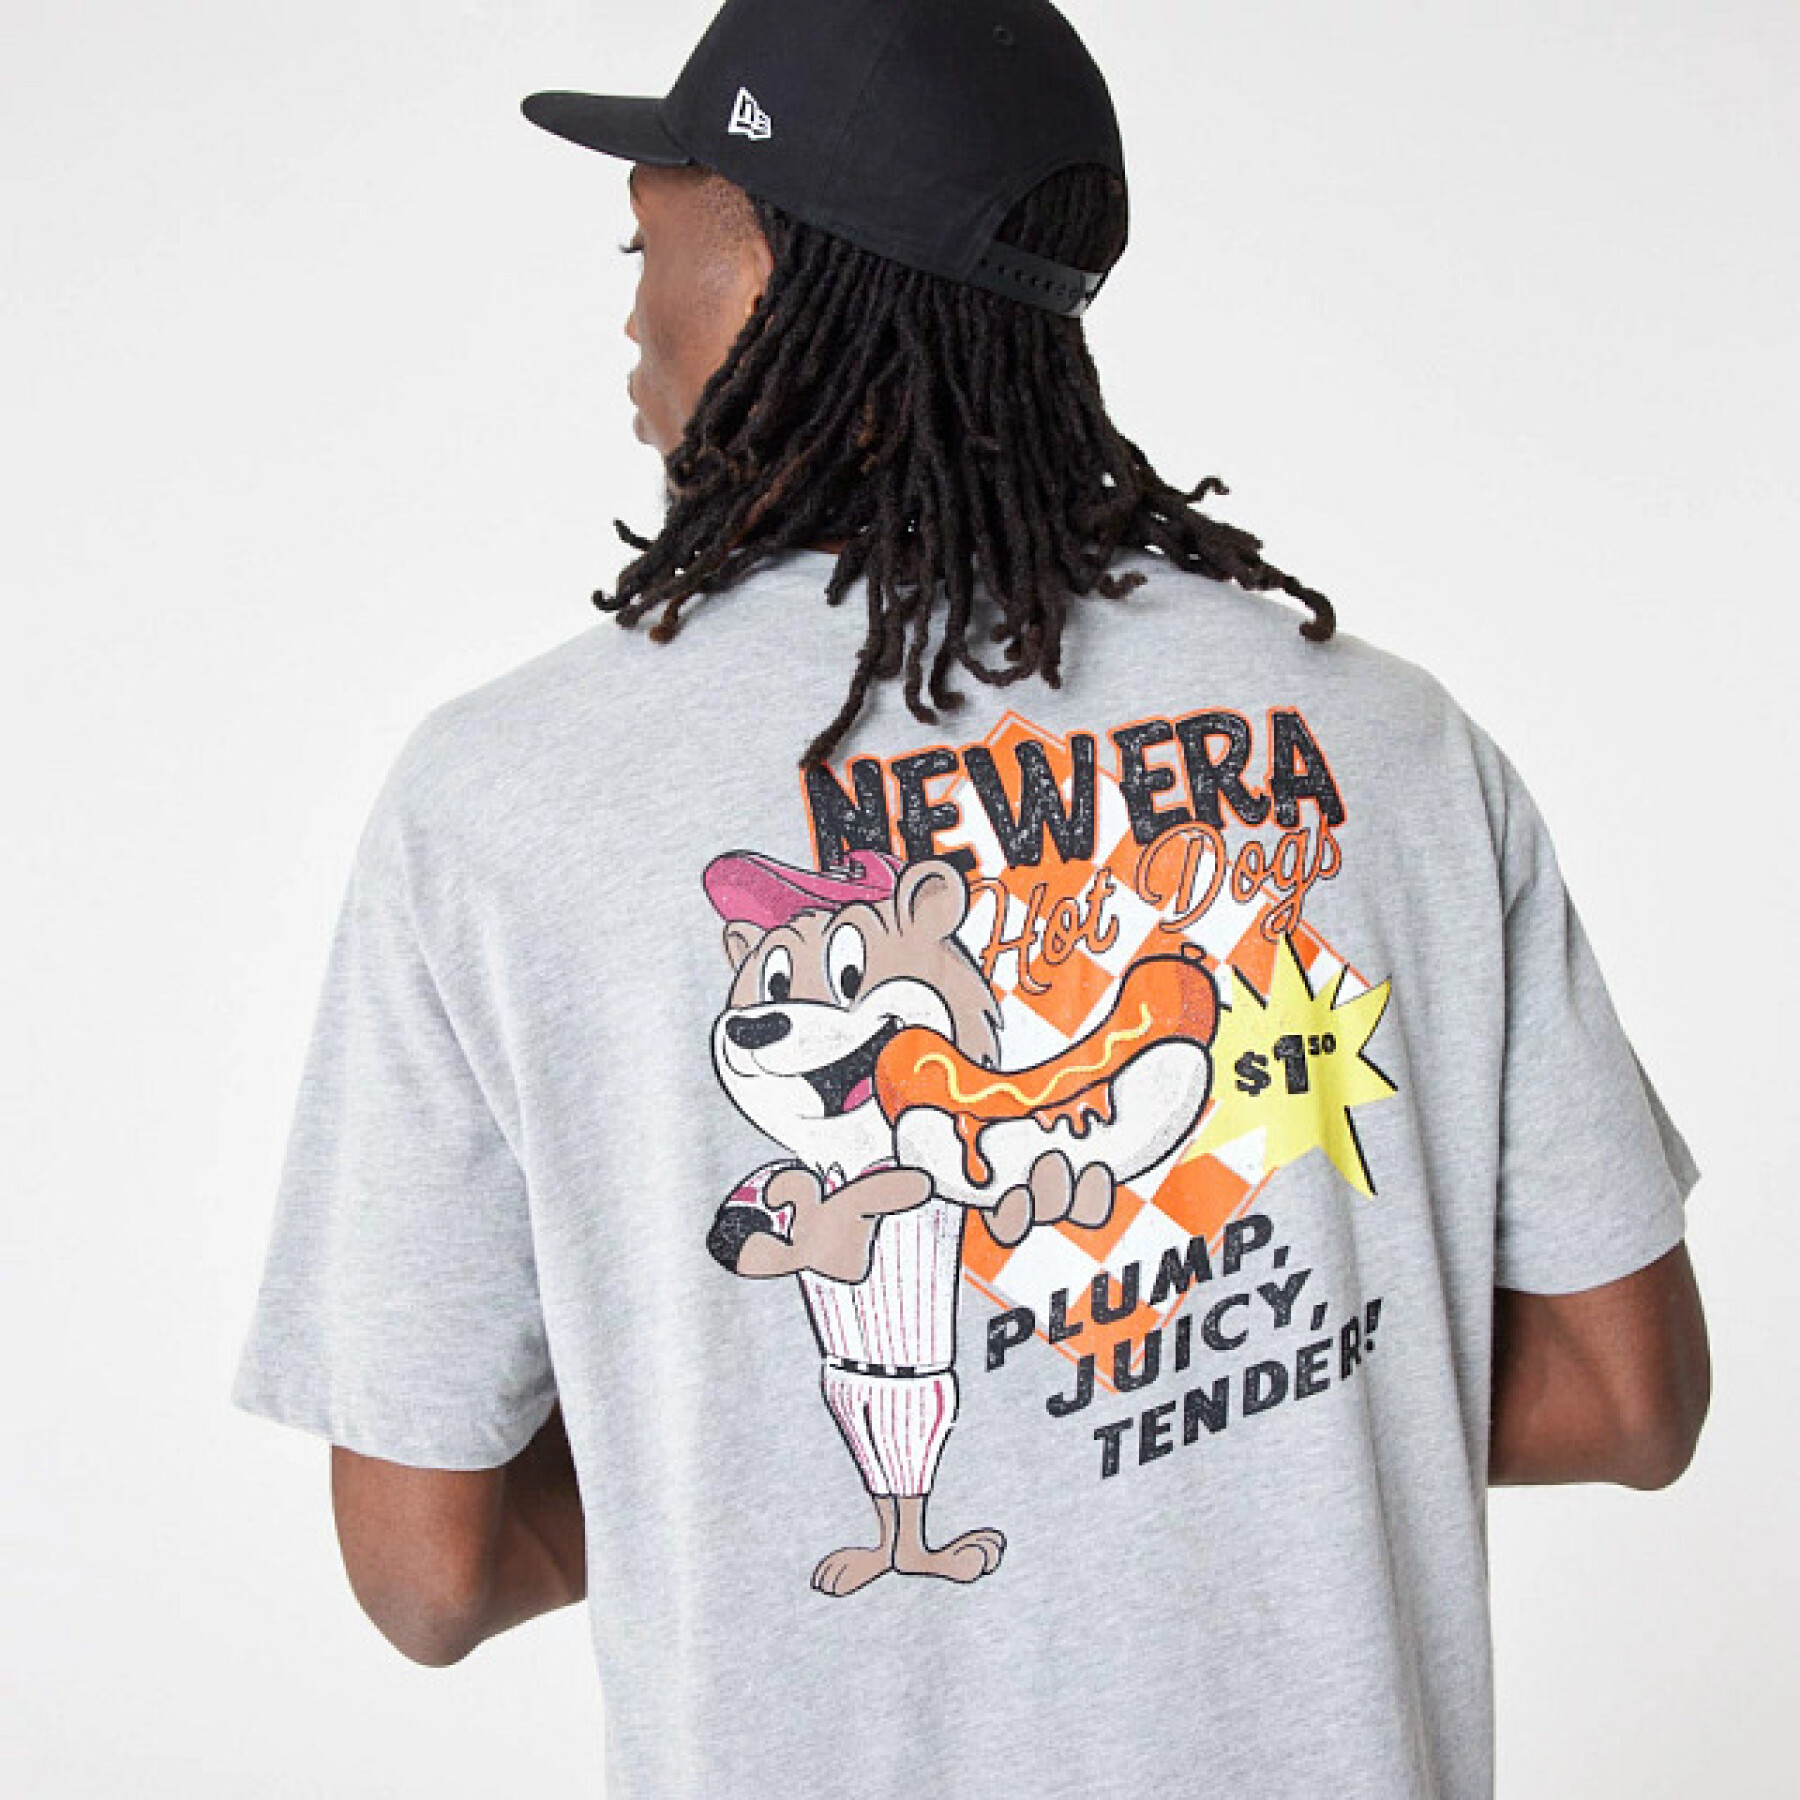 Oversized T-shirt New Era Hot Dog Bear